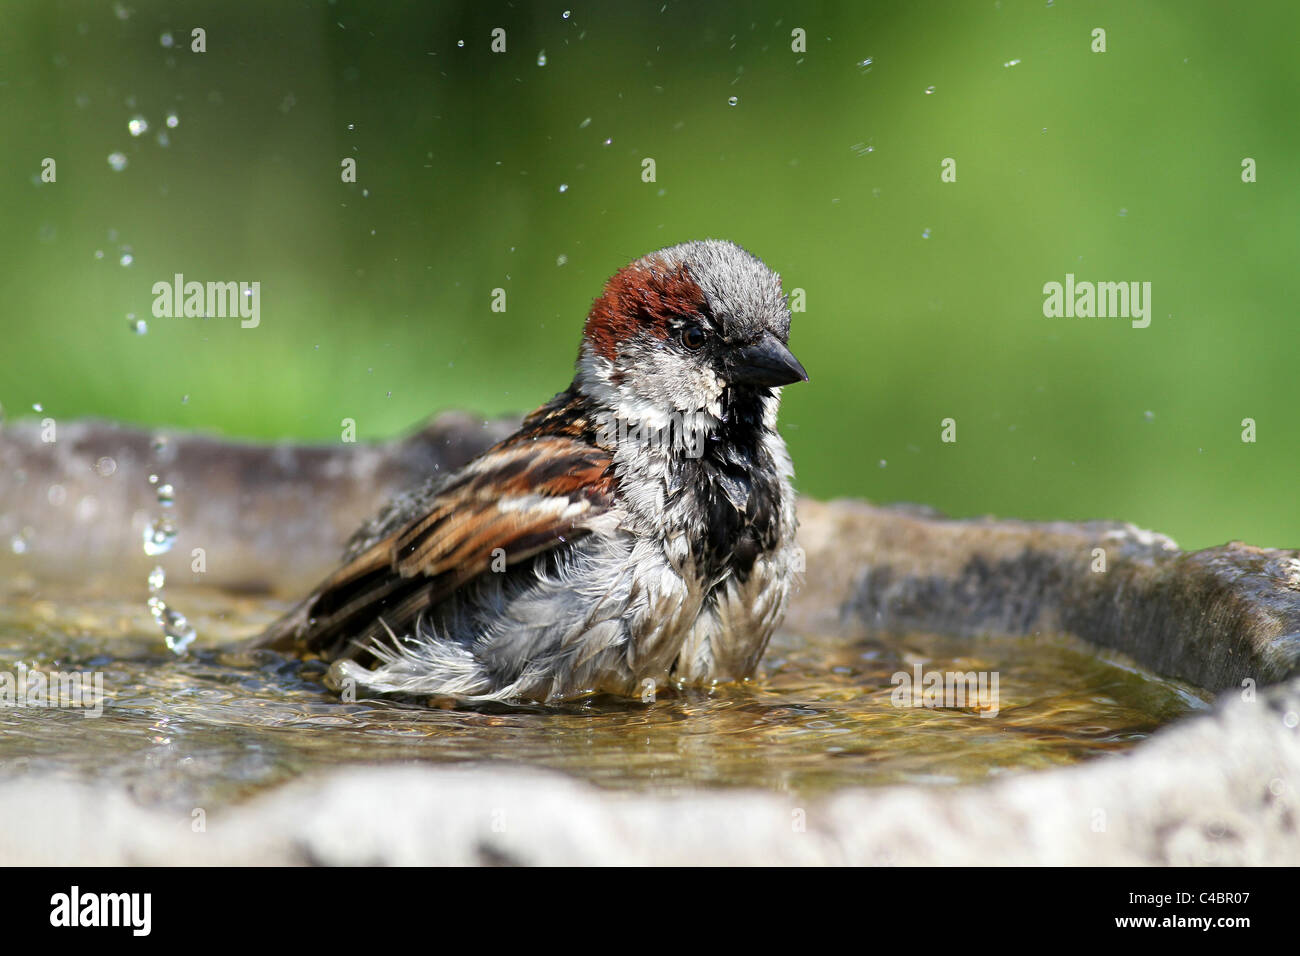 House sparrow taking a bath Stock Photo